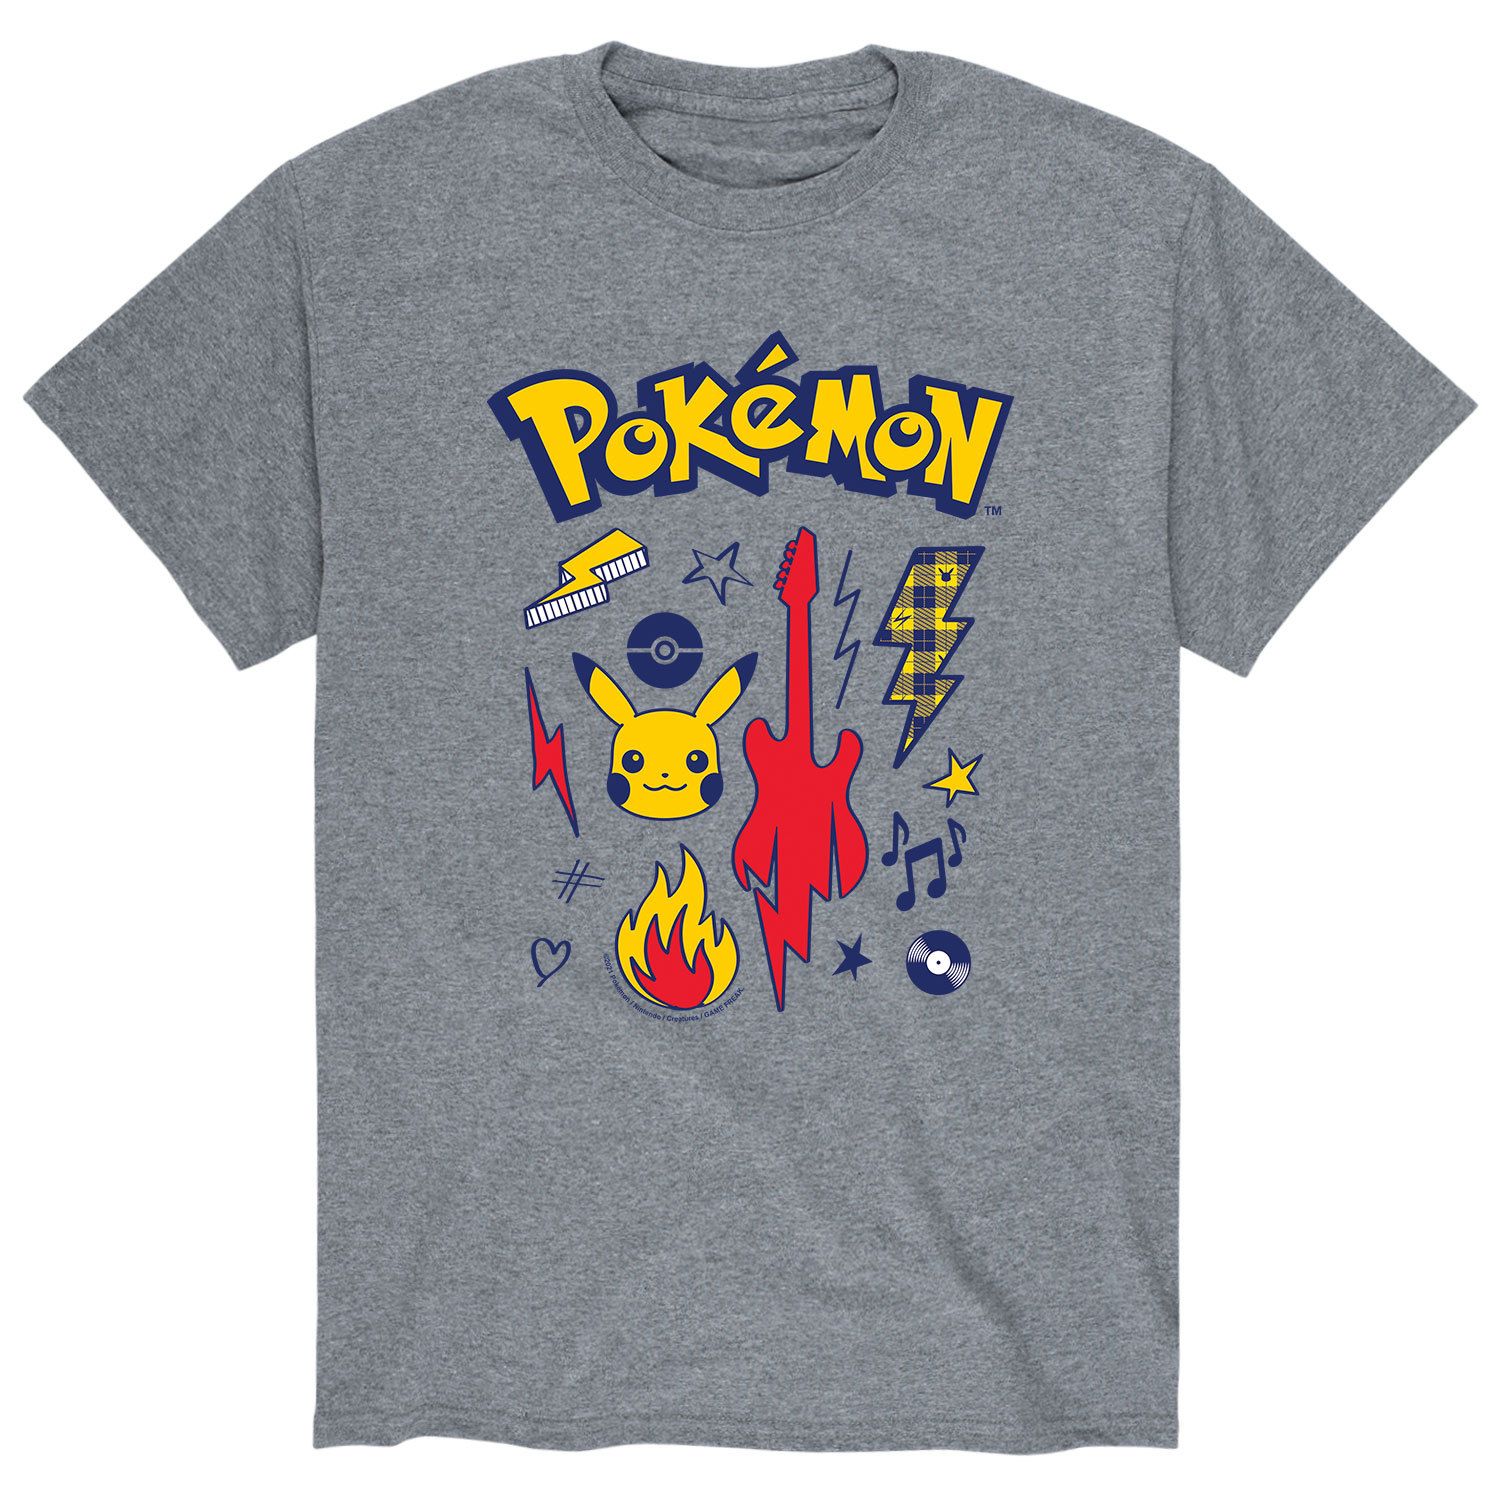 Мужская футболка Pokemon Punk Icons Licensed Character набор pokemon футболка obstagoon punk серая s кружка для свч